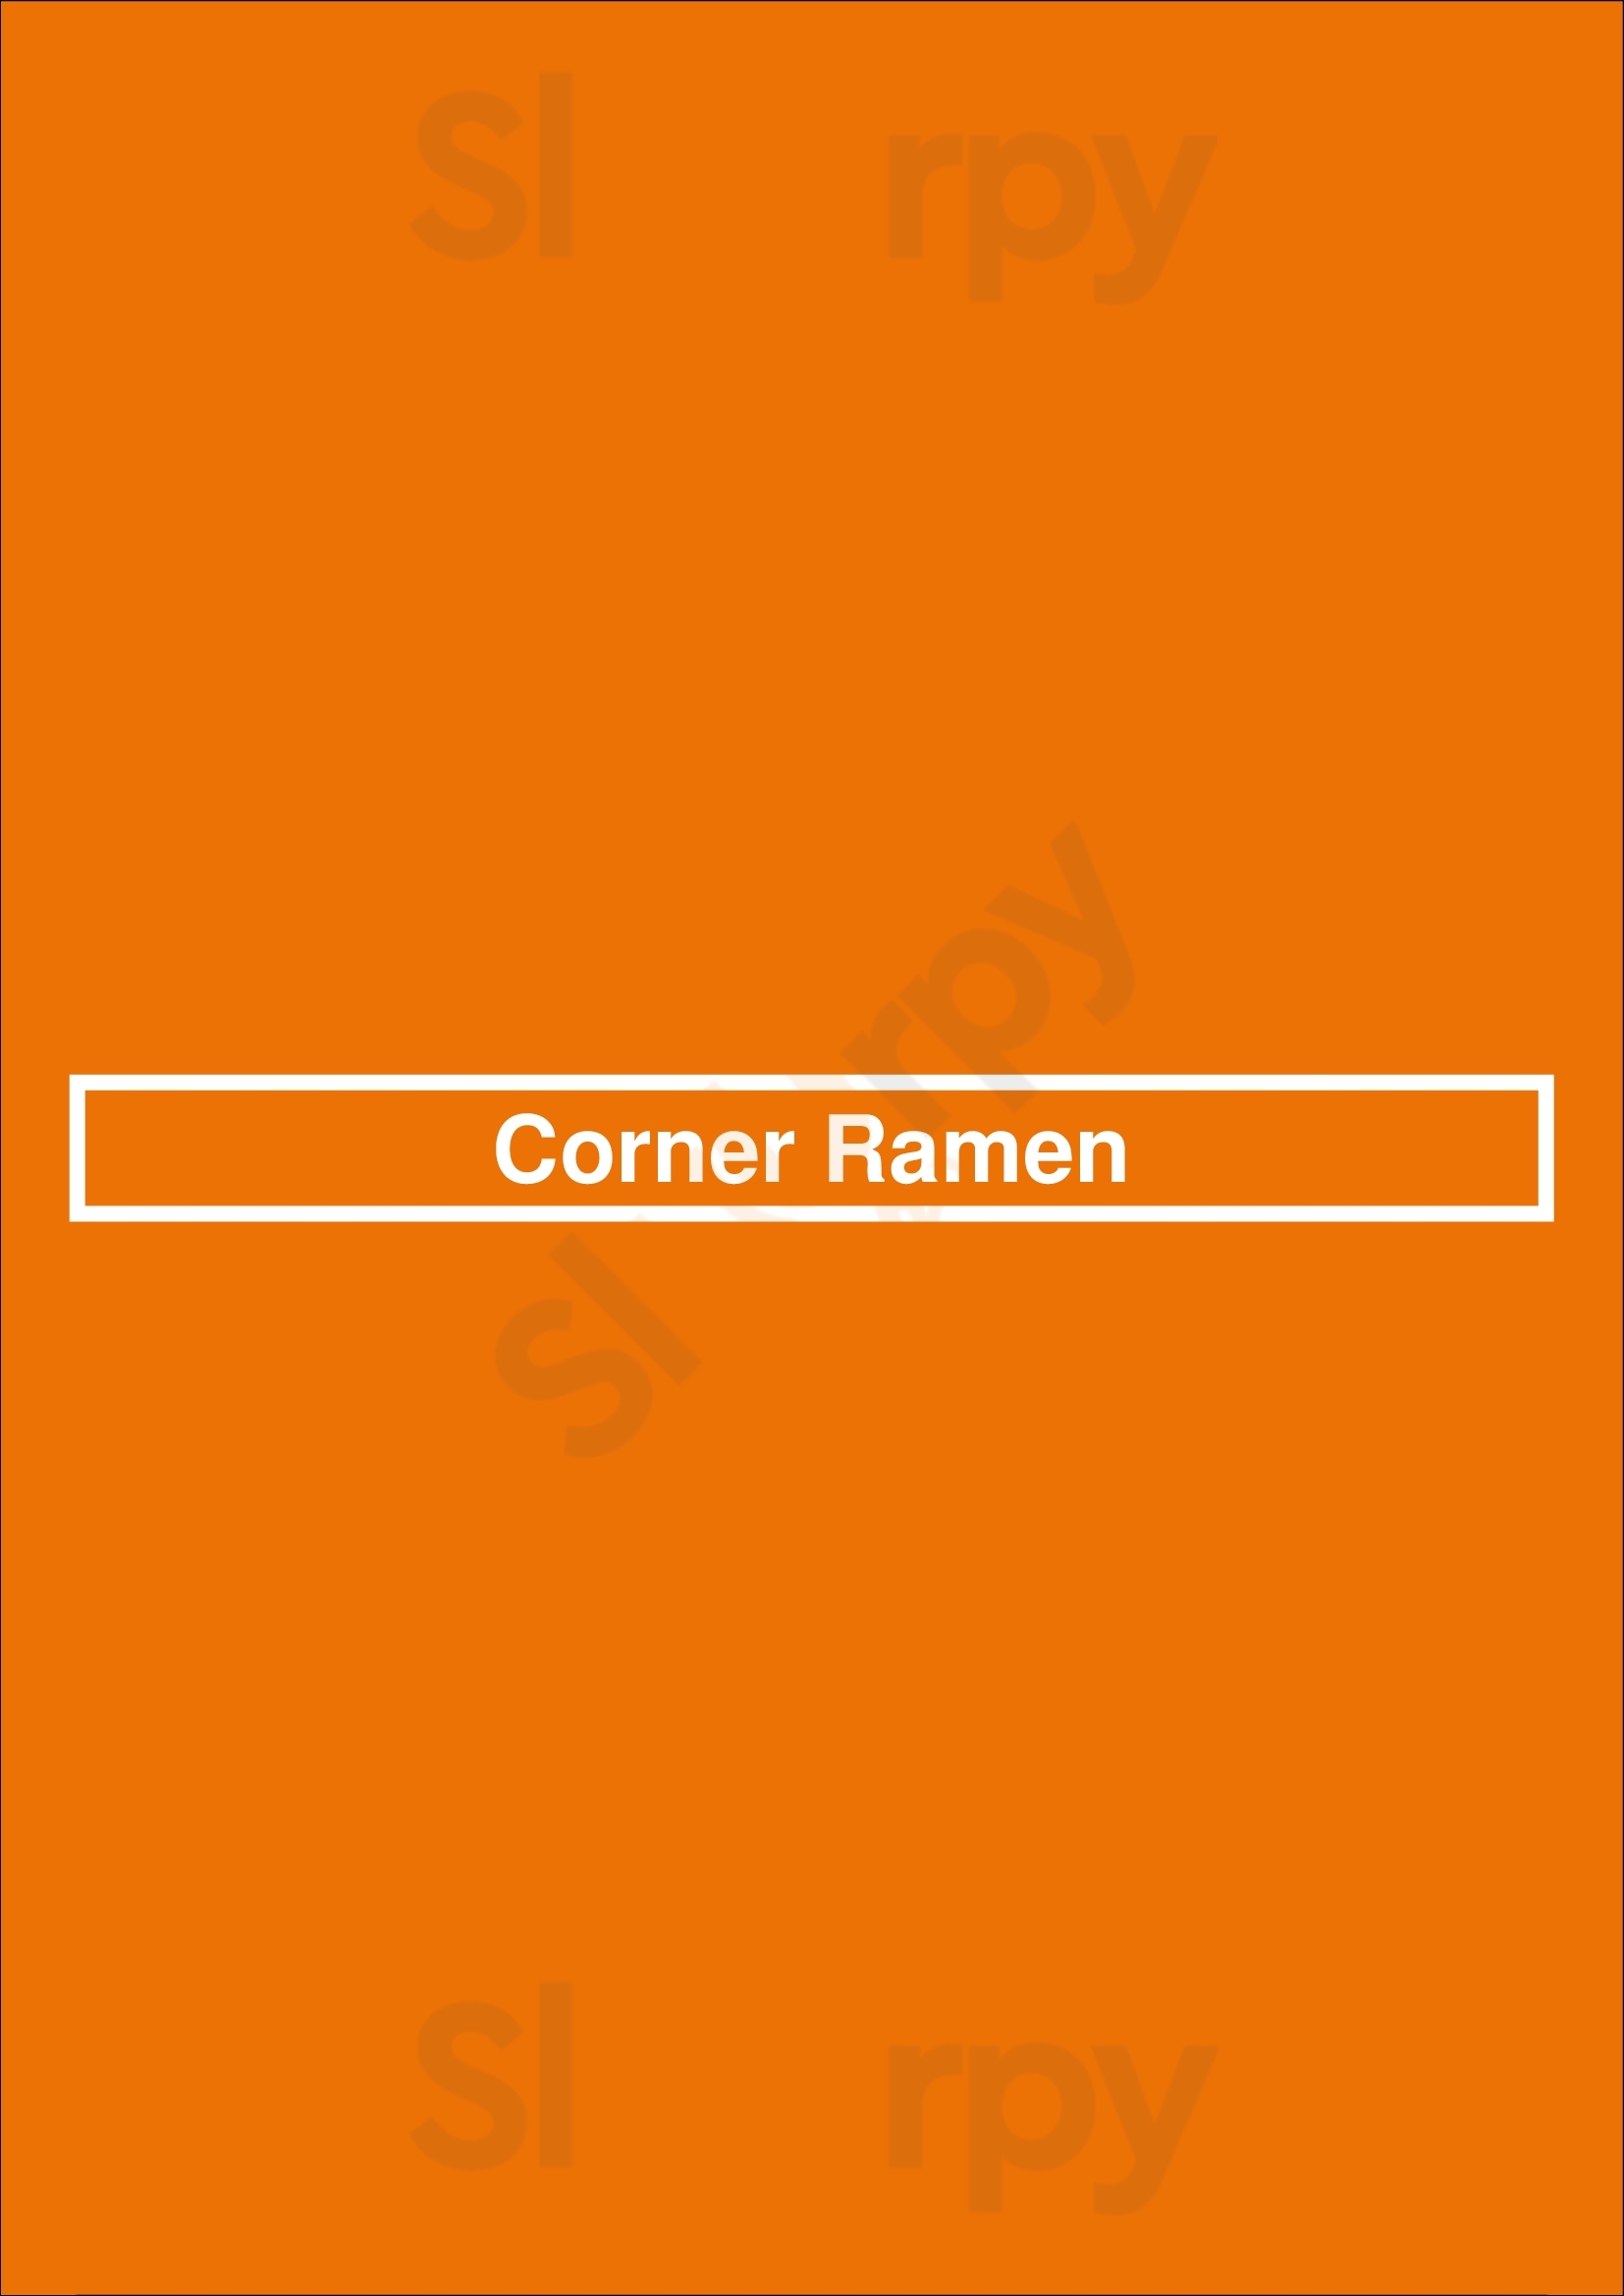 Corner Ramen Denver Menu - 1